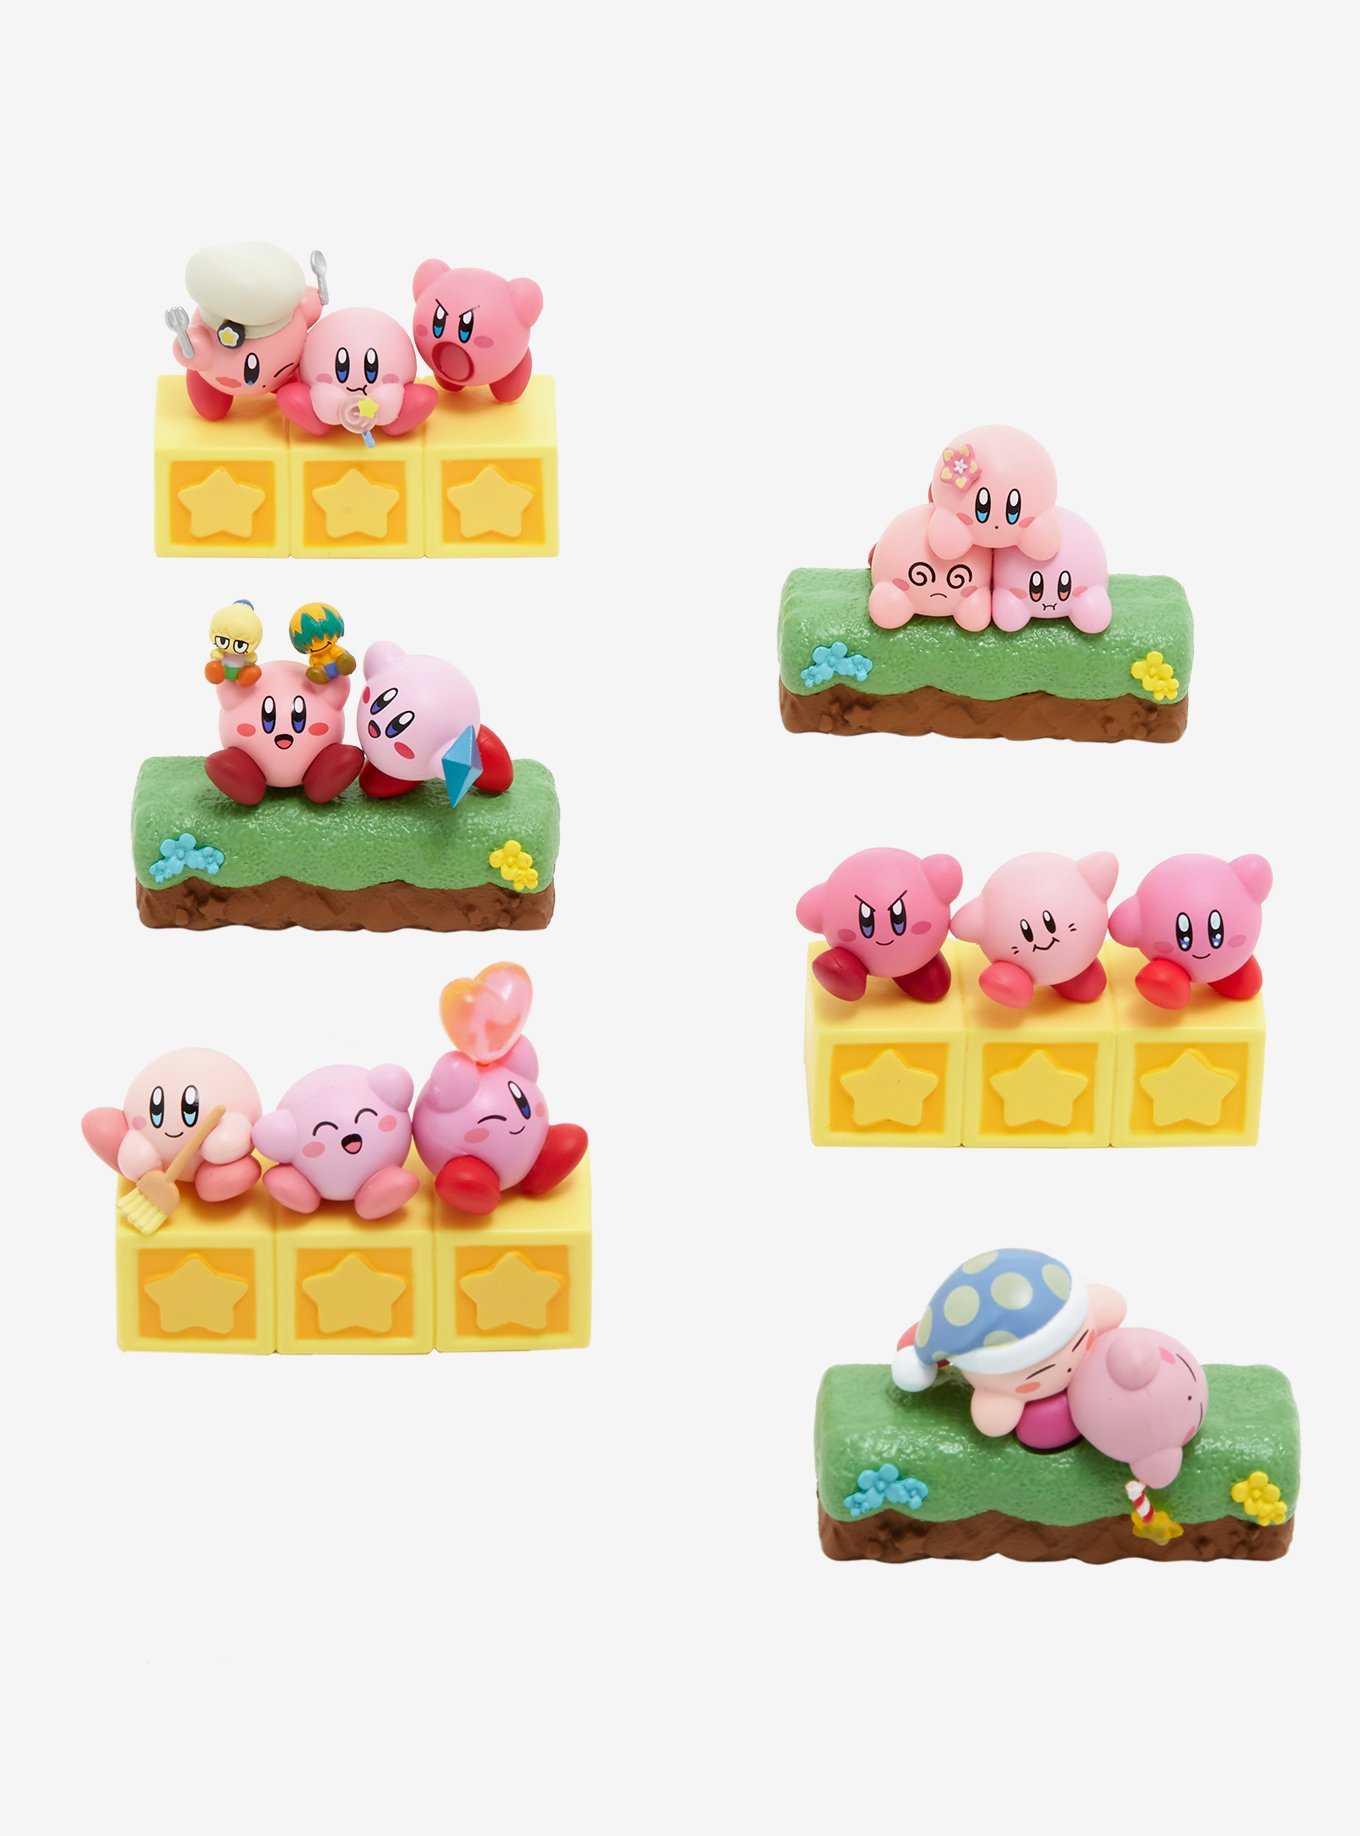 Kirby lunch box 😀 : r/Kirby